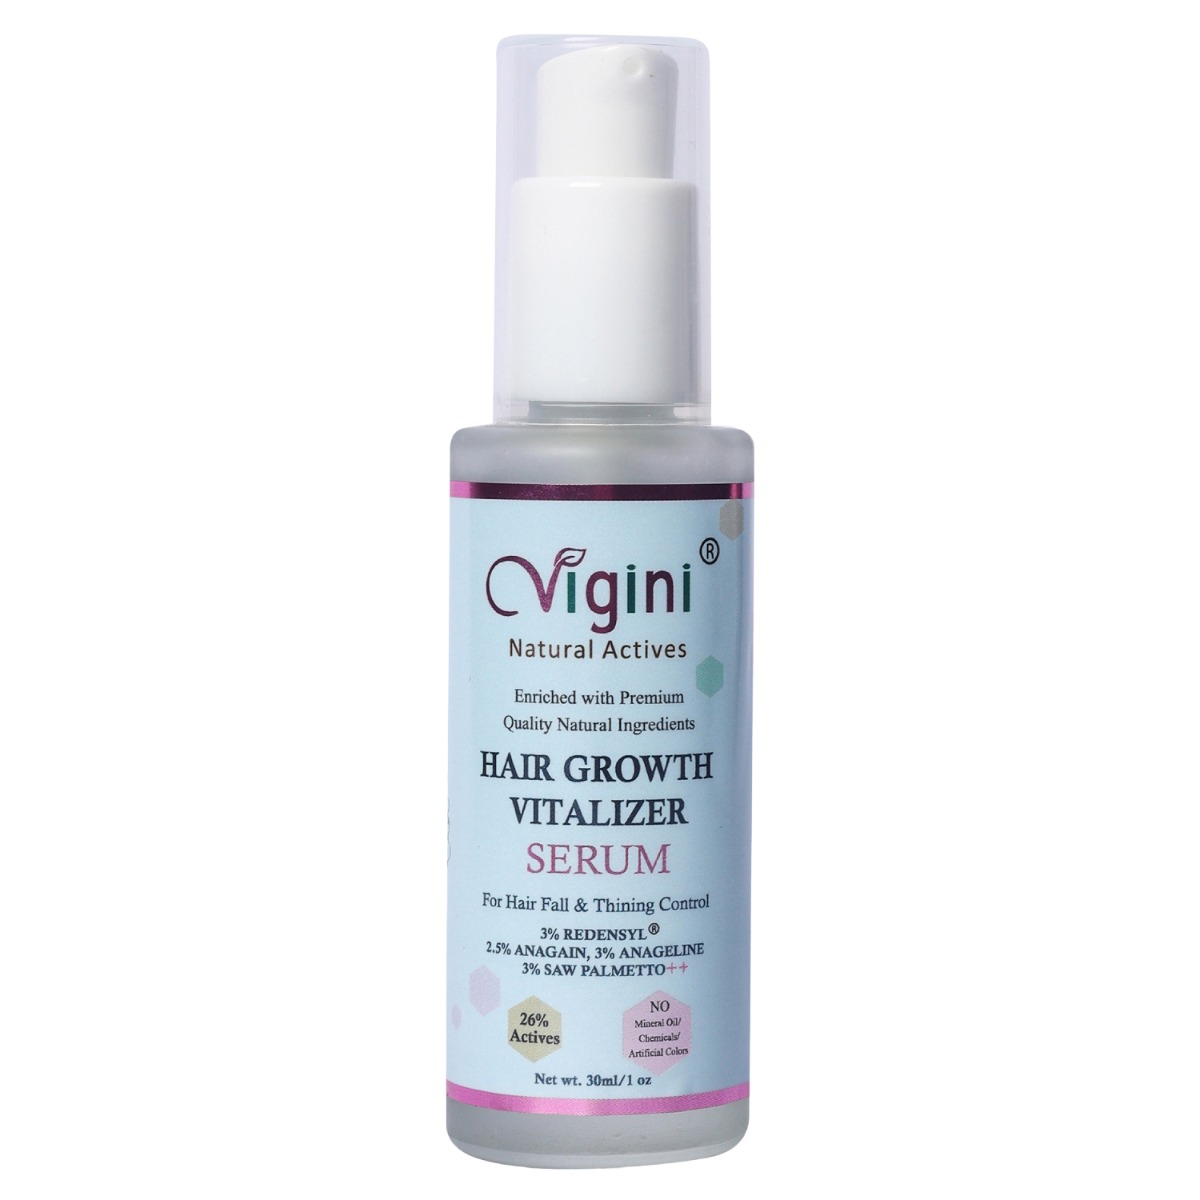 Vigini 26% Actives 3% Redensyl Hair Care Growth Vitalizer Serum For Men & Women, 30ml